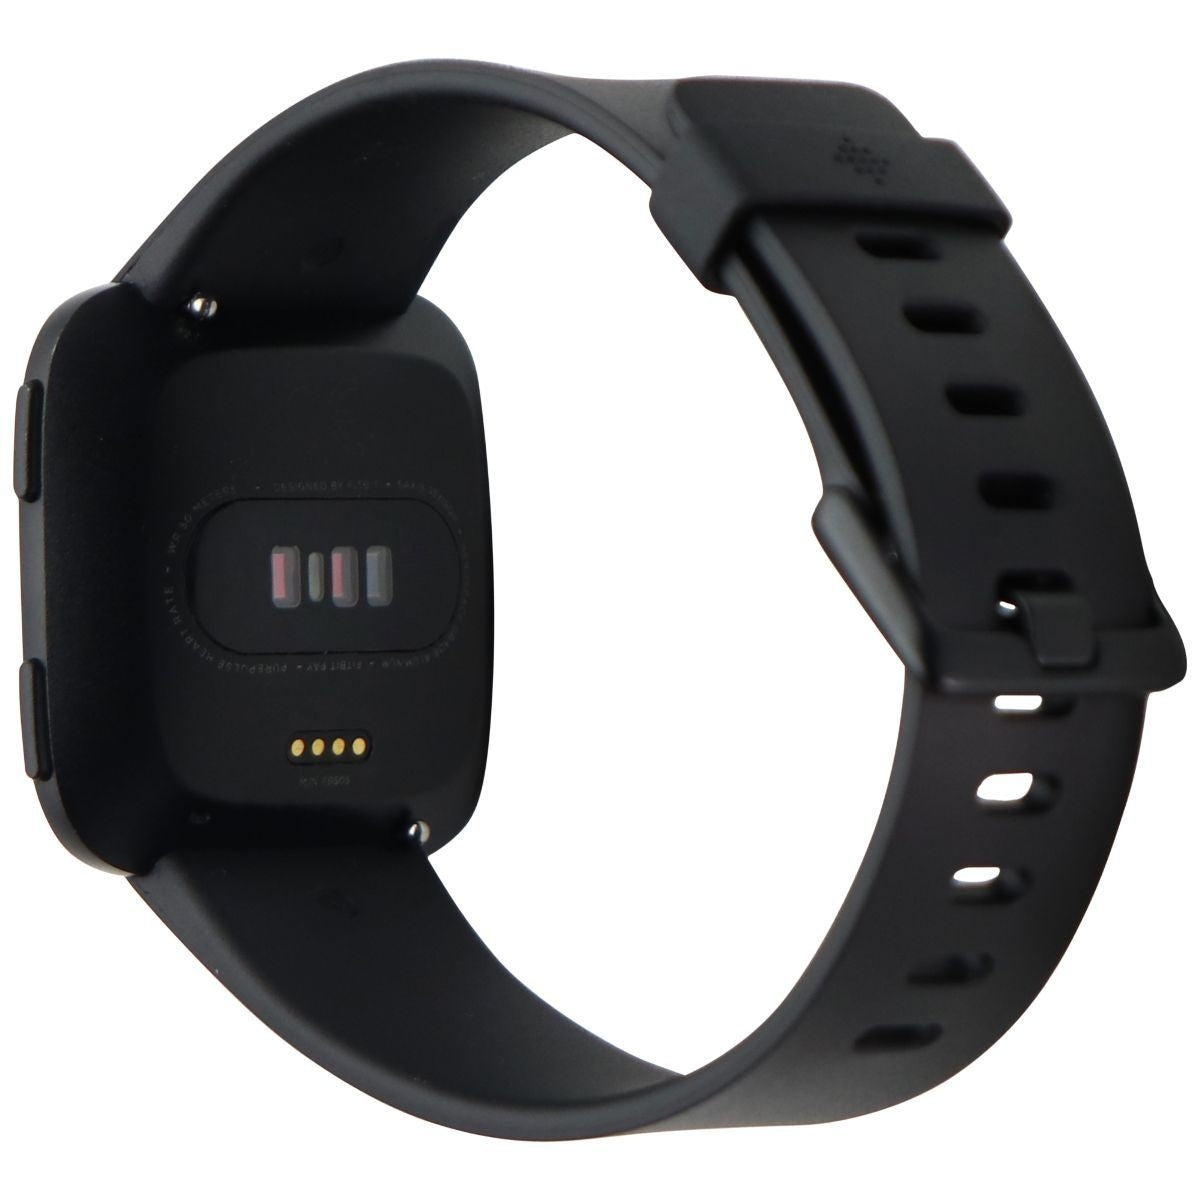 Fitbit Versa (1st Gen) Smart Watch - Black Aluminum/Black Band (FB505)